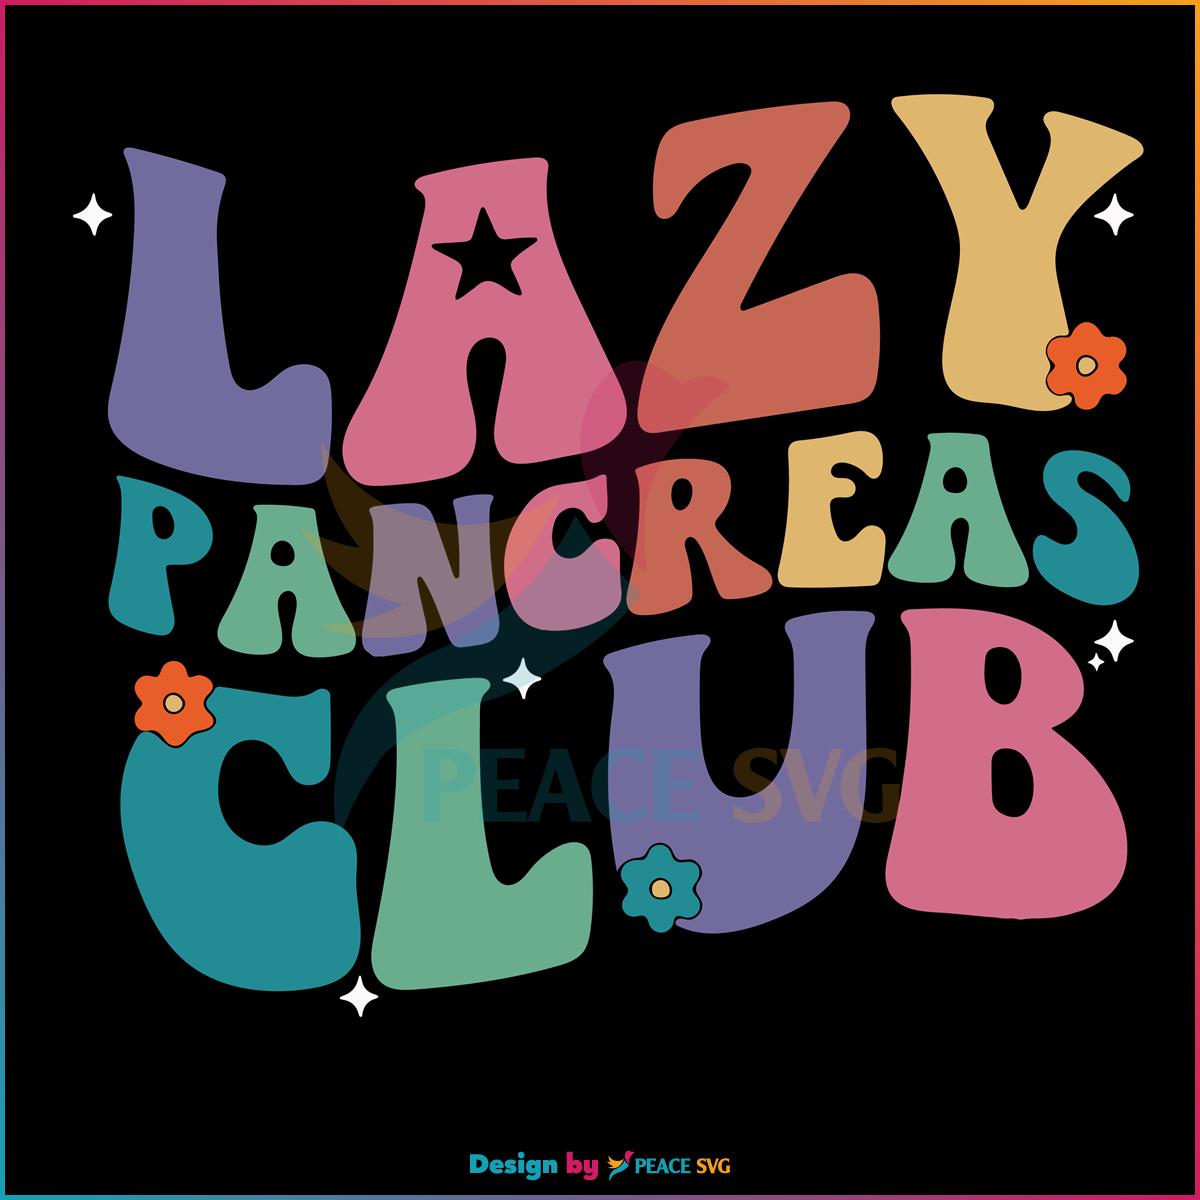 Lazy Pancreas Club Awareness World Diabetes Day SVG